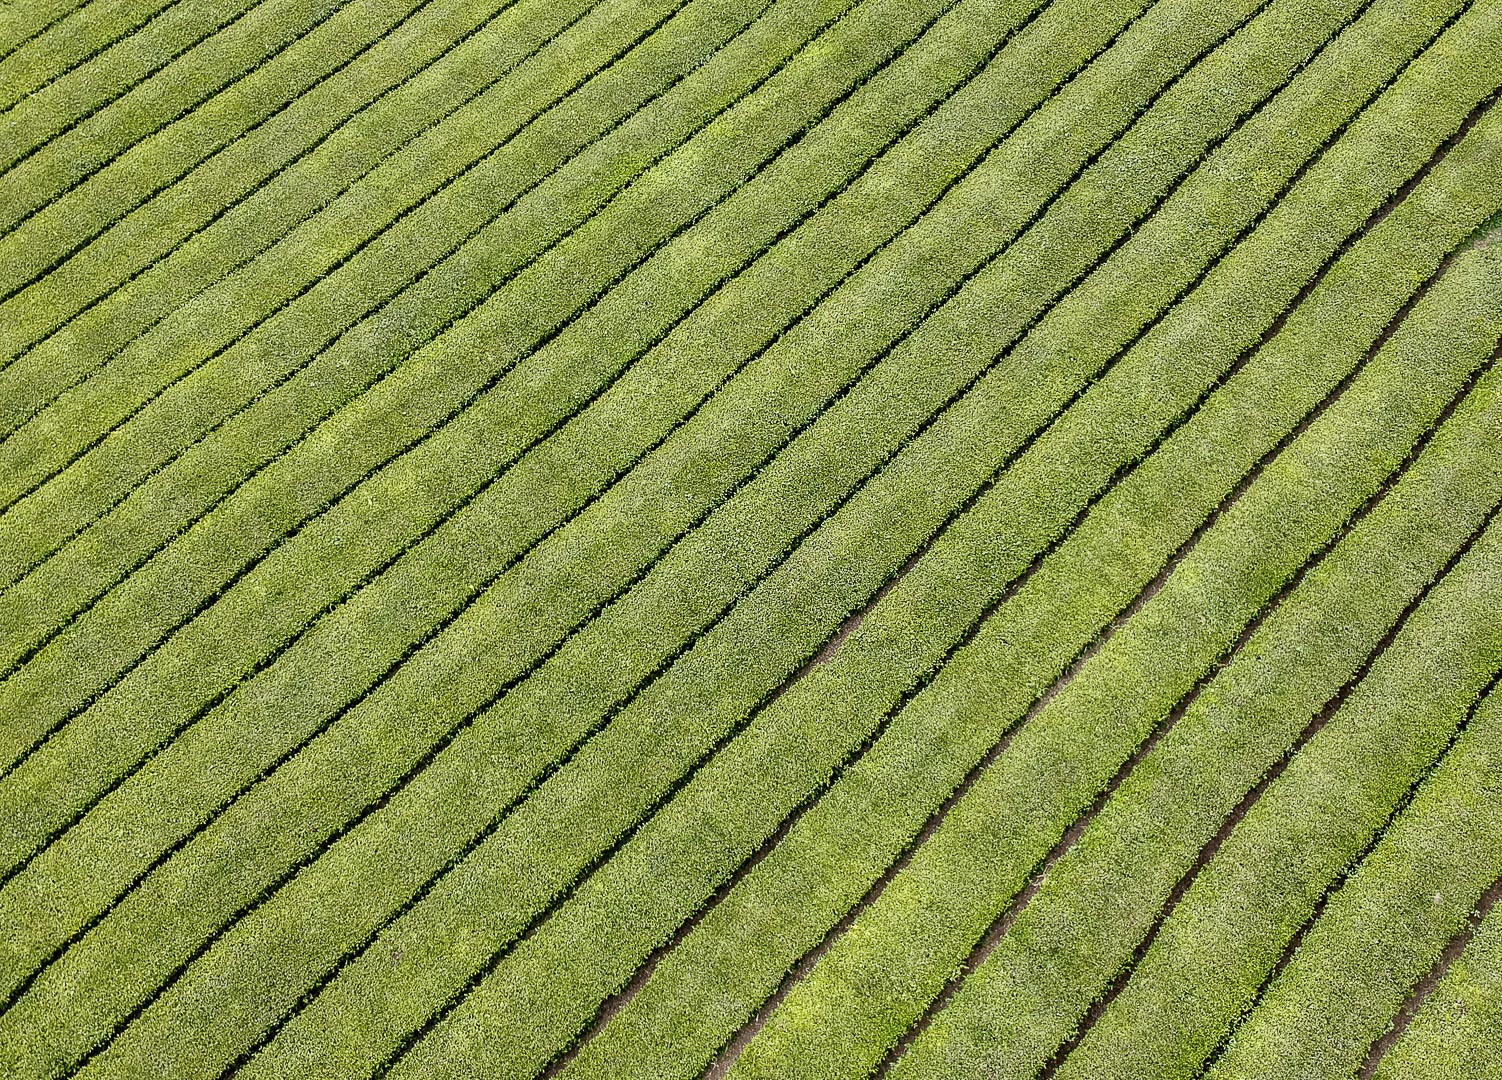 Tea Plantation by Janos Demeter, EPSA